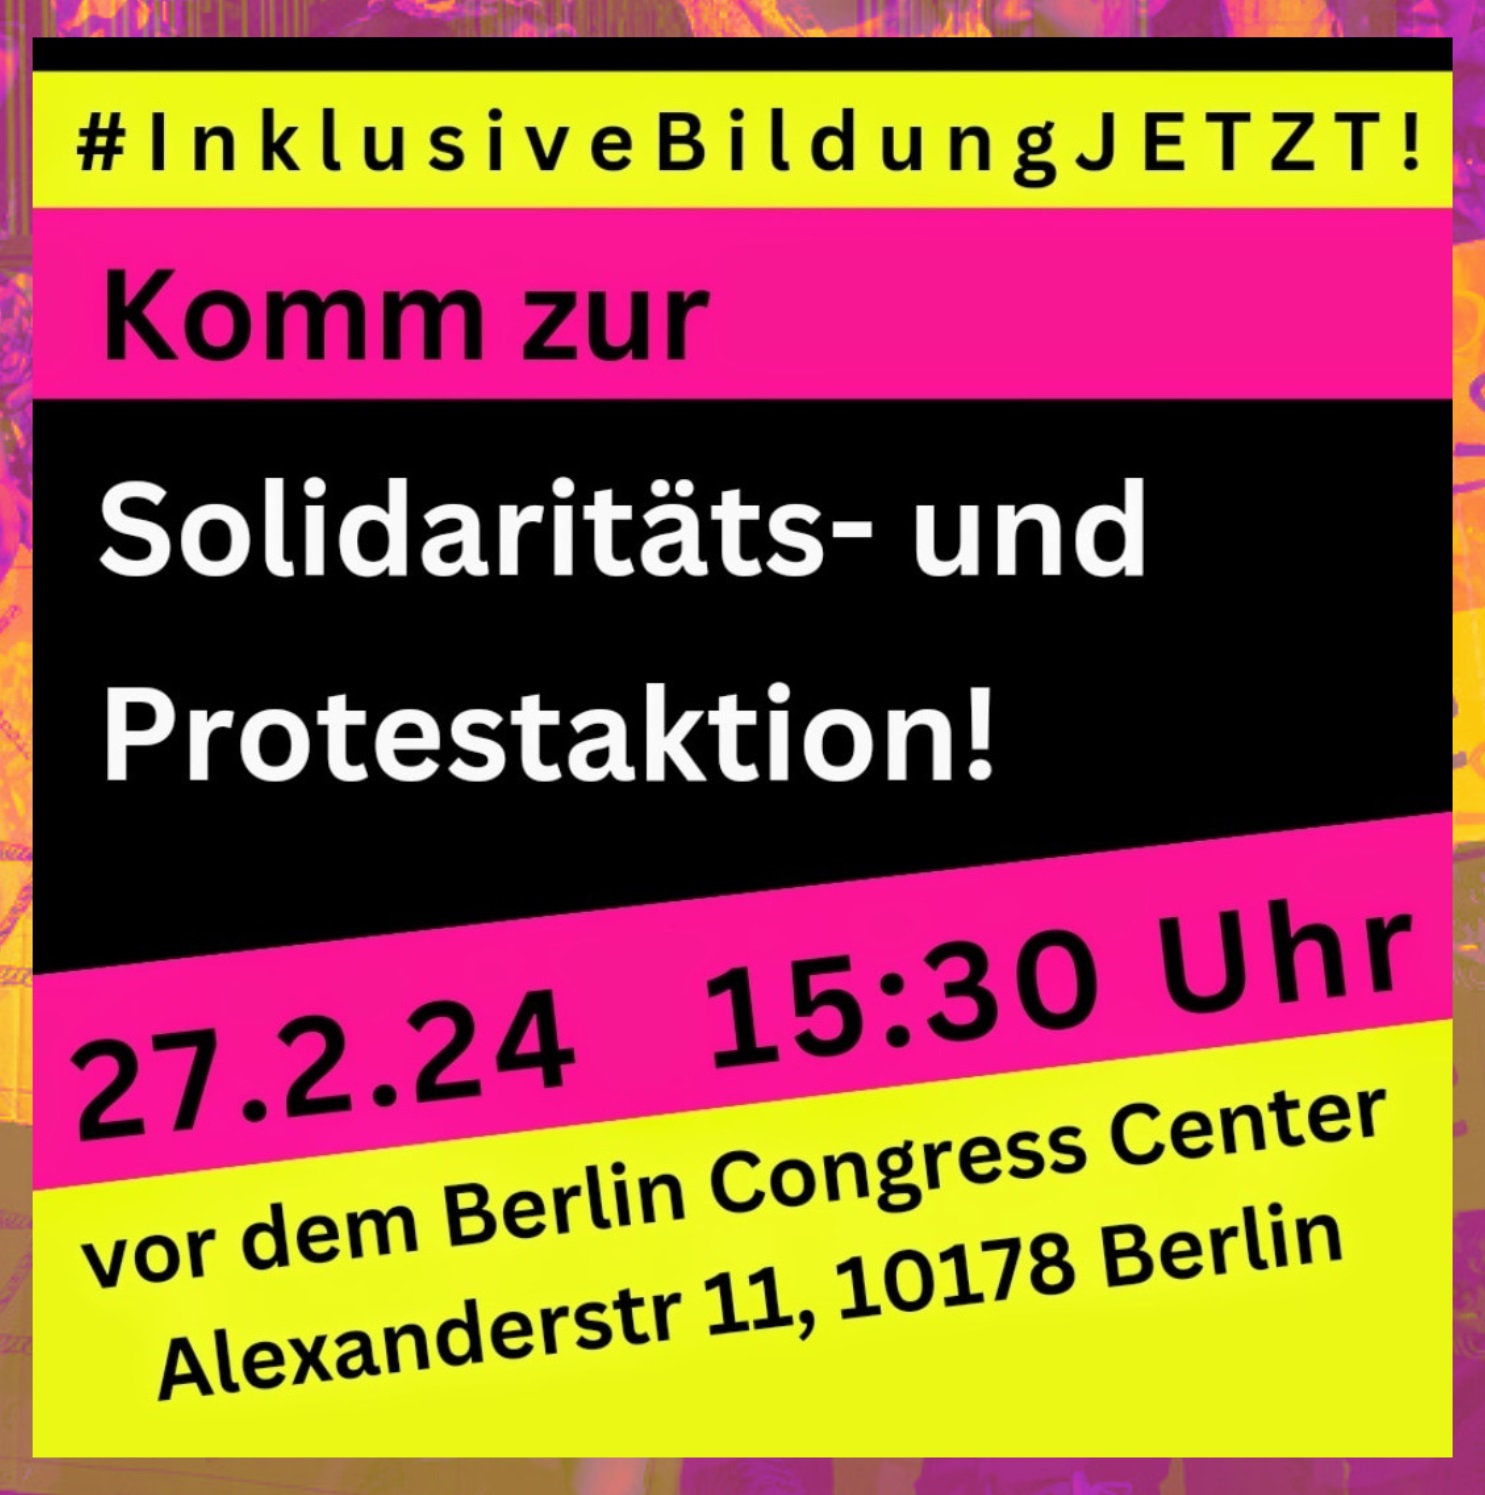 Grafik mit viel Text: #InklusiveBildungJETZT! Komm zur Solidaritäts- und Protestaktion! 27.2.24 15:30 vor dem Berlin Congress Center Alexanderstr 11, 10178 Berlin